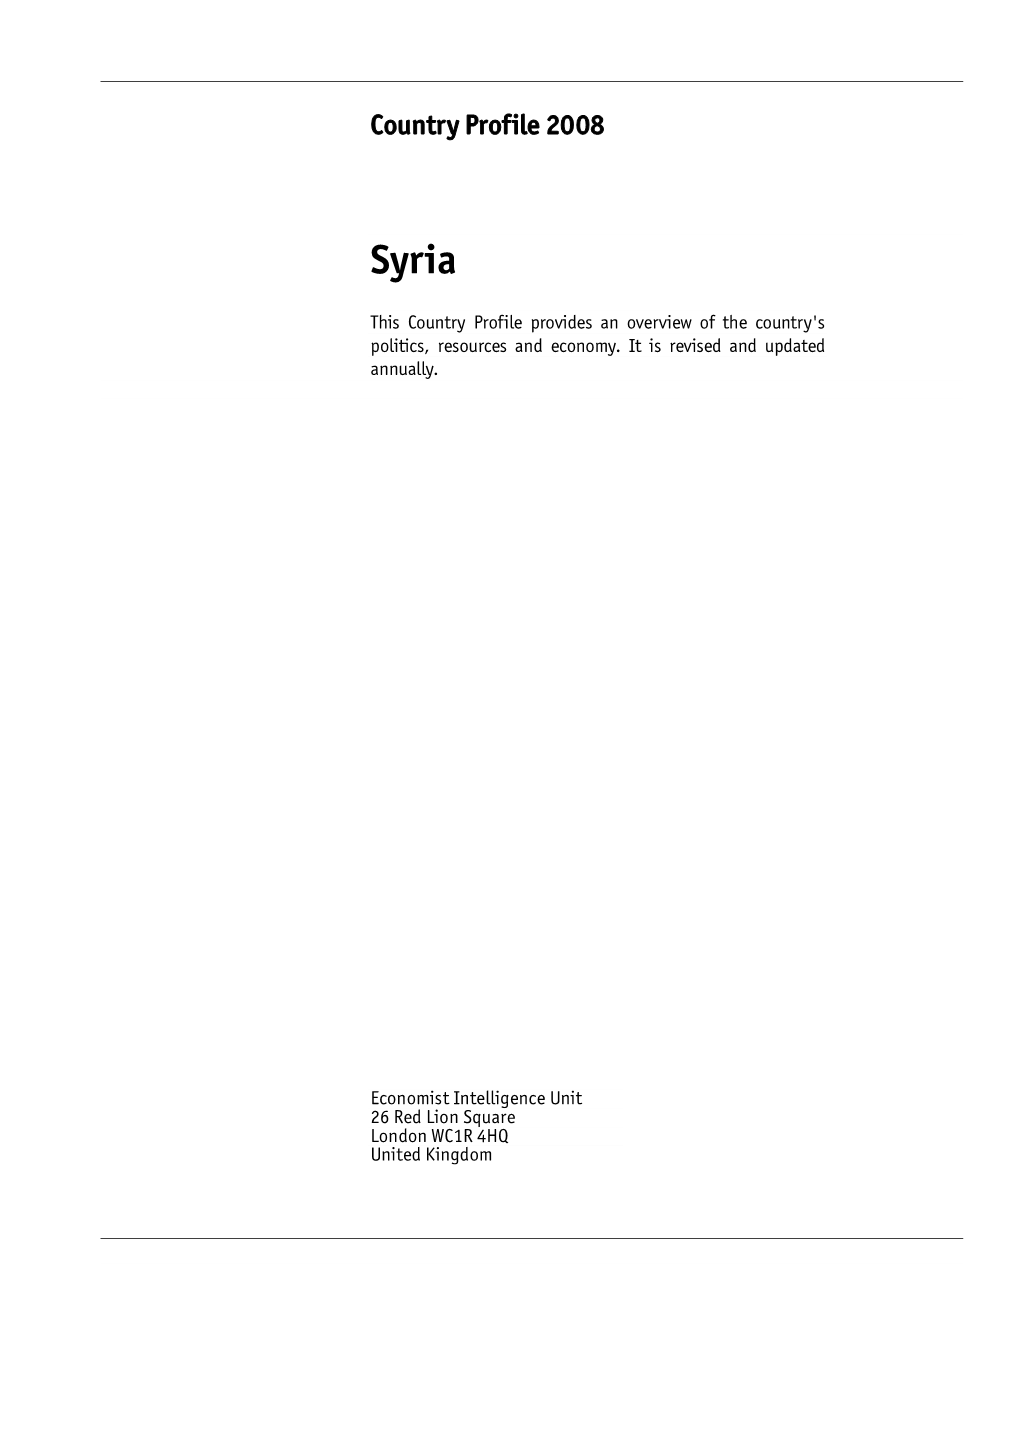 221426 Country Profile 2008 Syria.Pdf